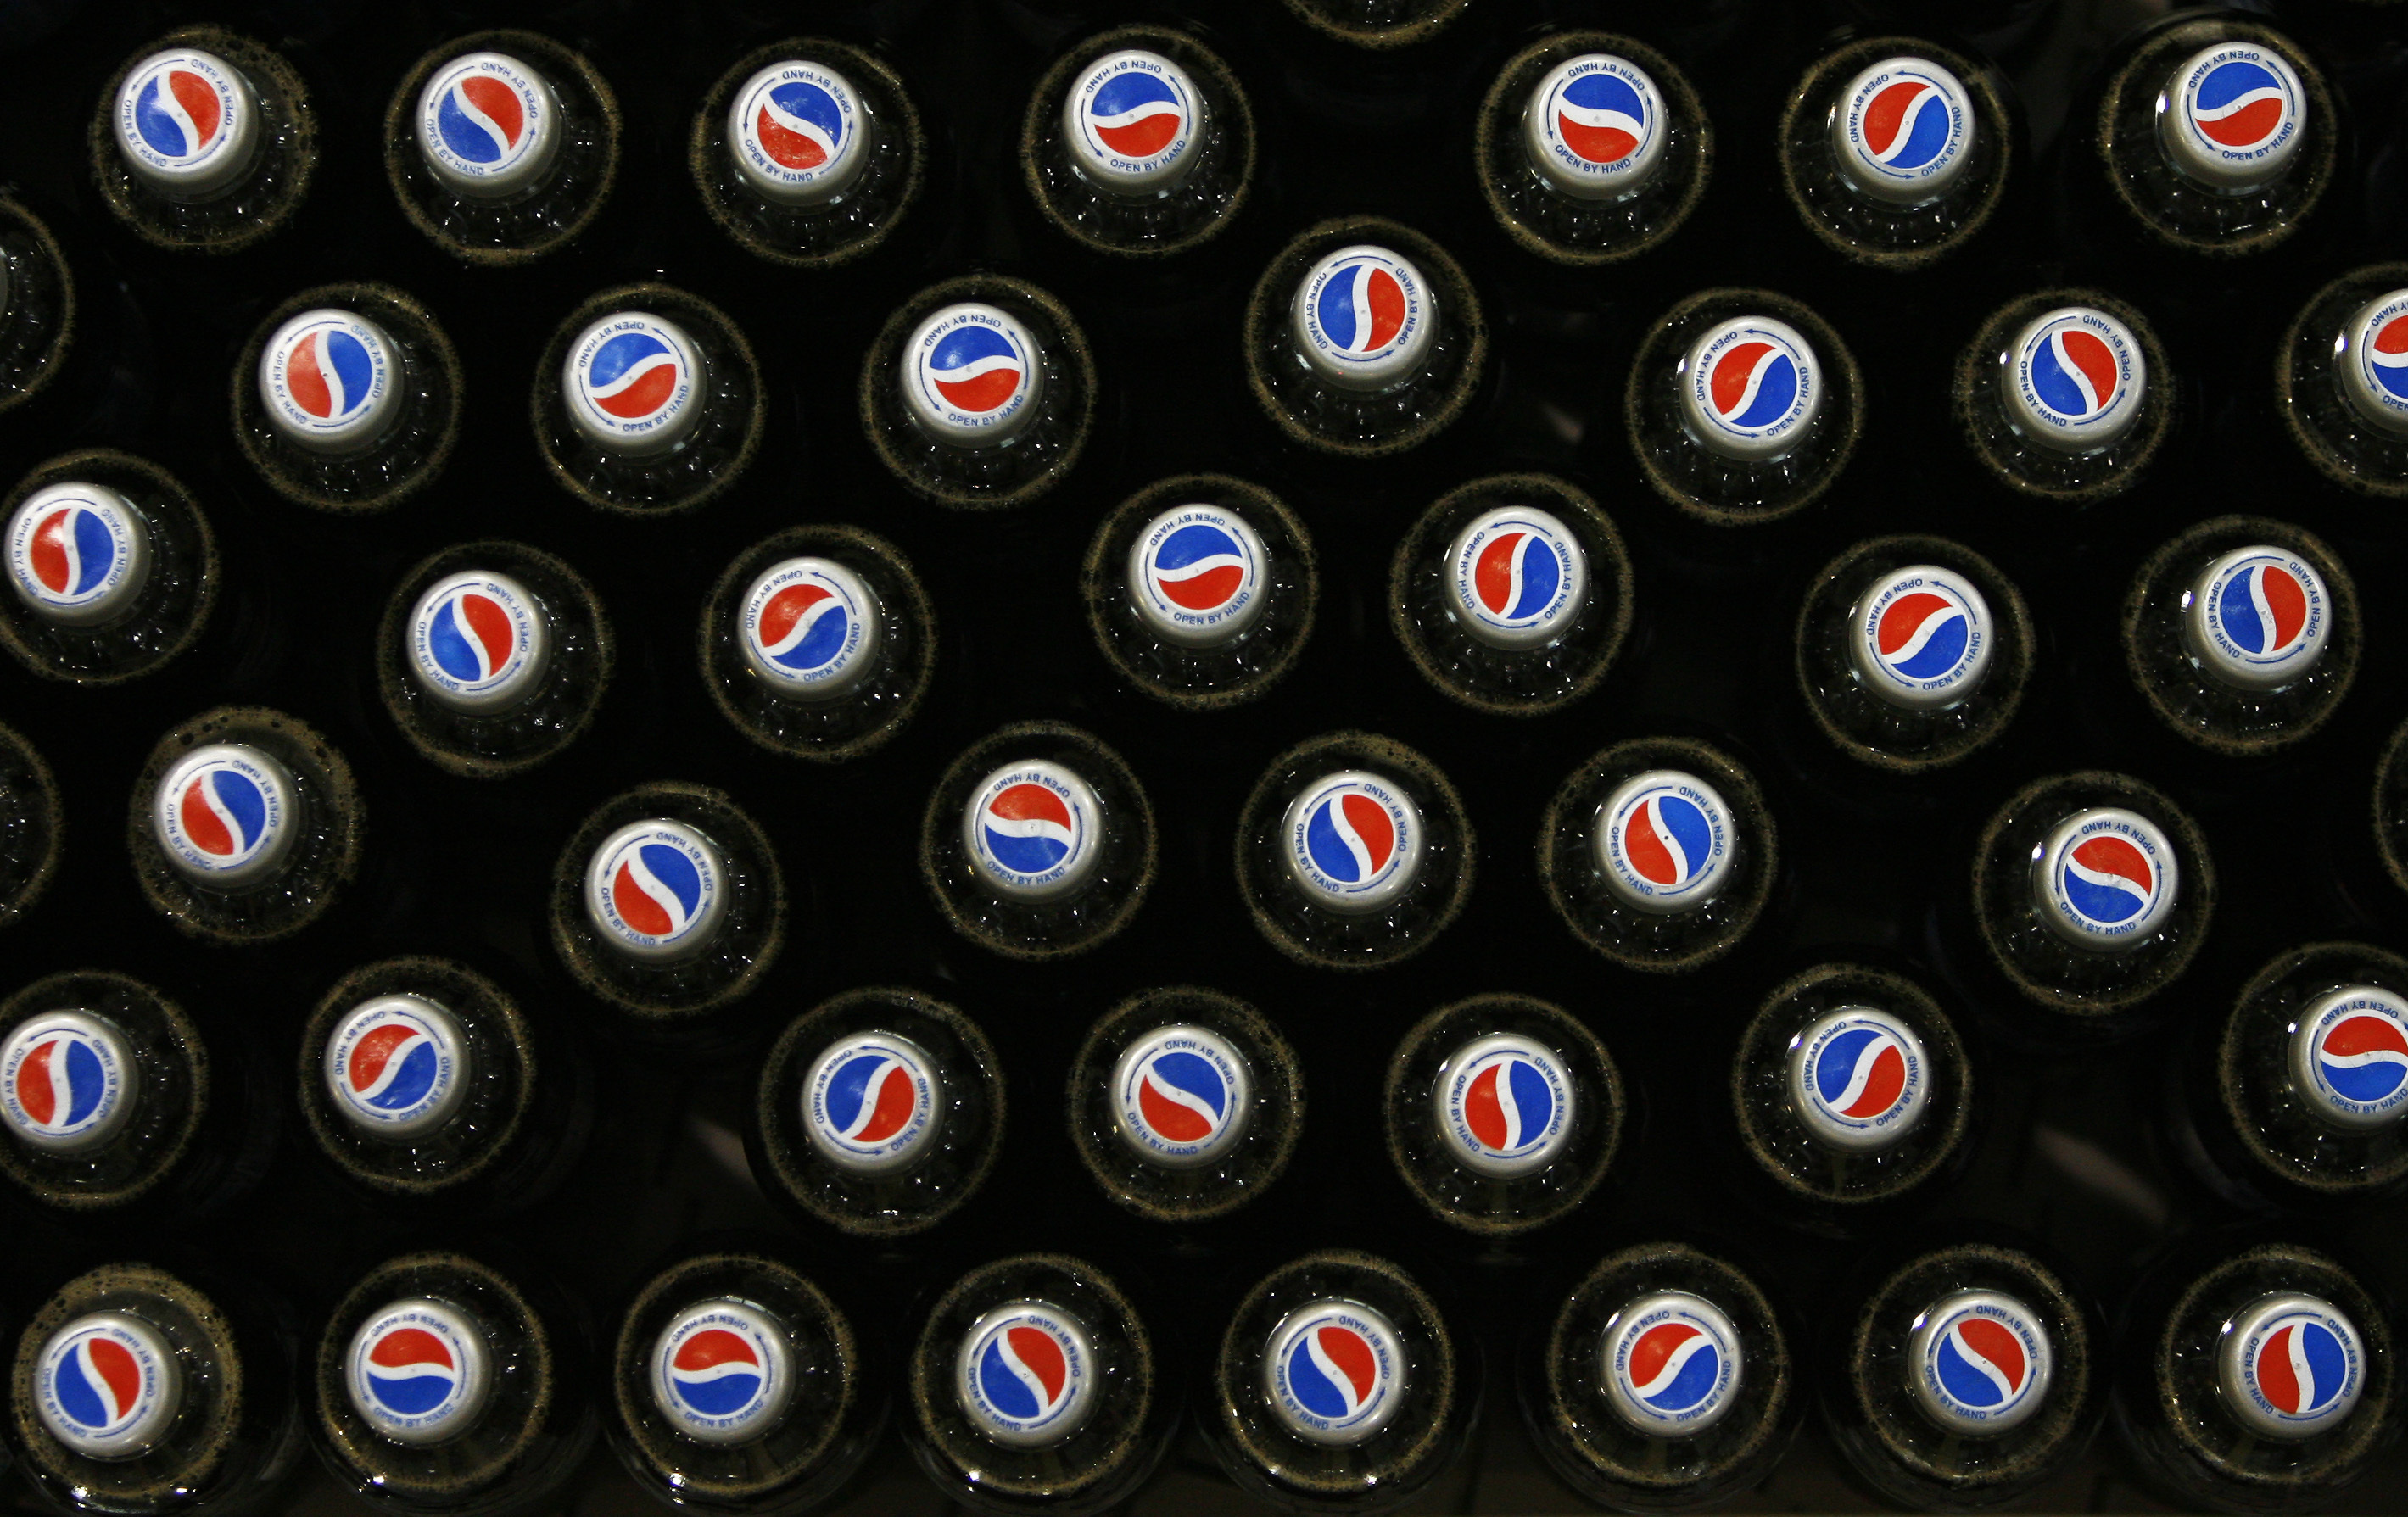 Pepsi bottles sit on a conveyor belt at drinks company Britvic's bottling plant in London